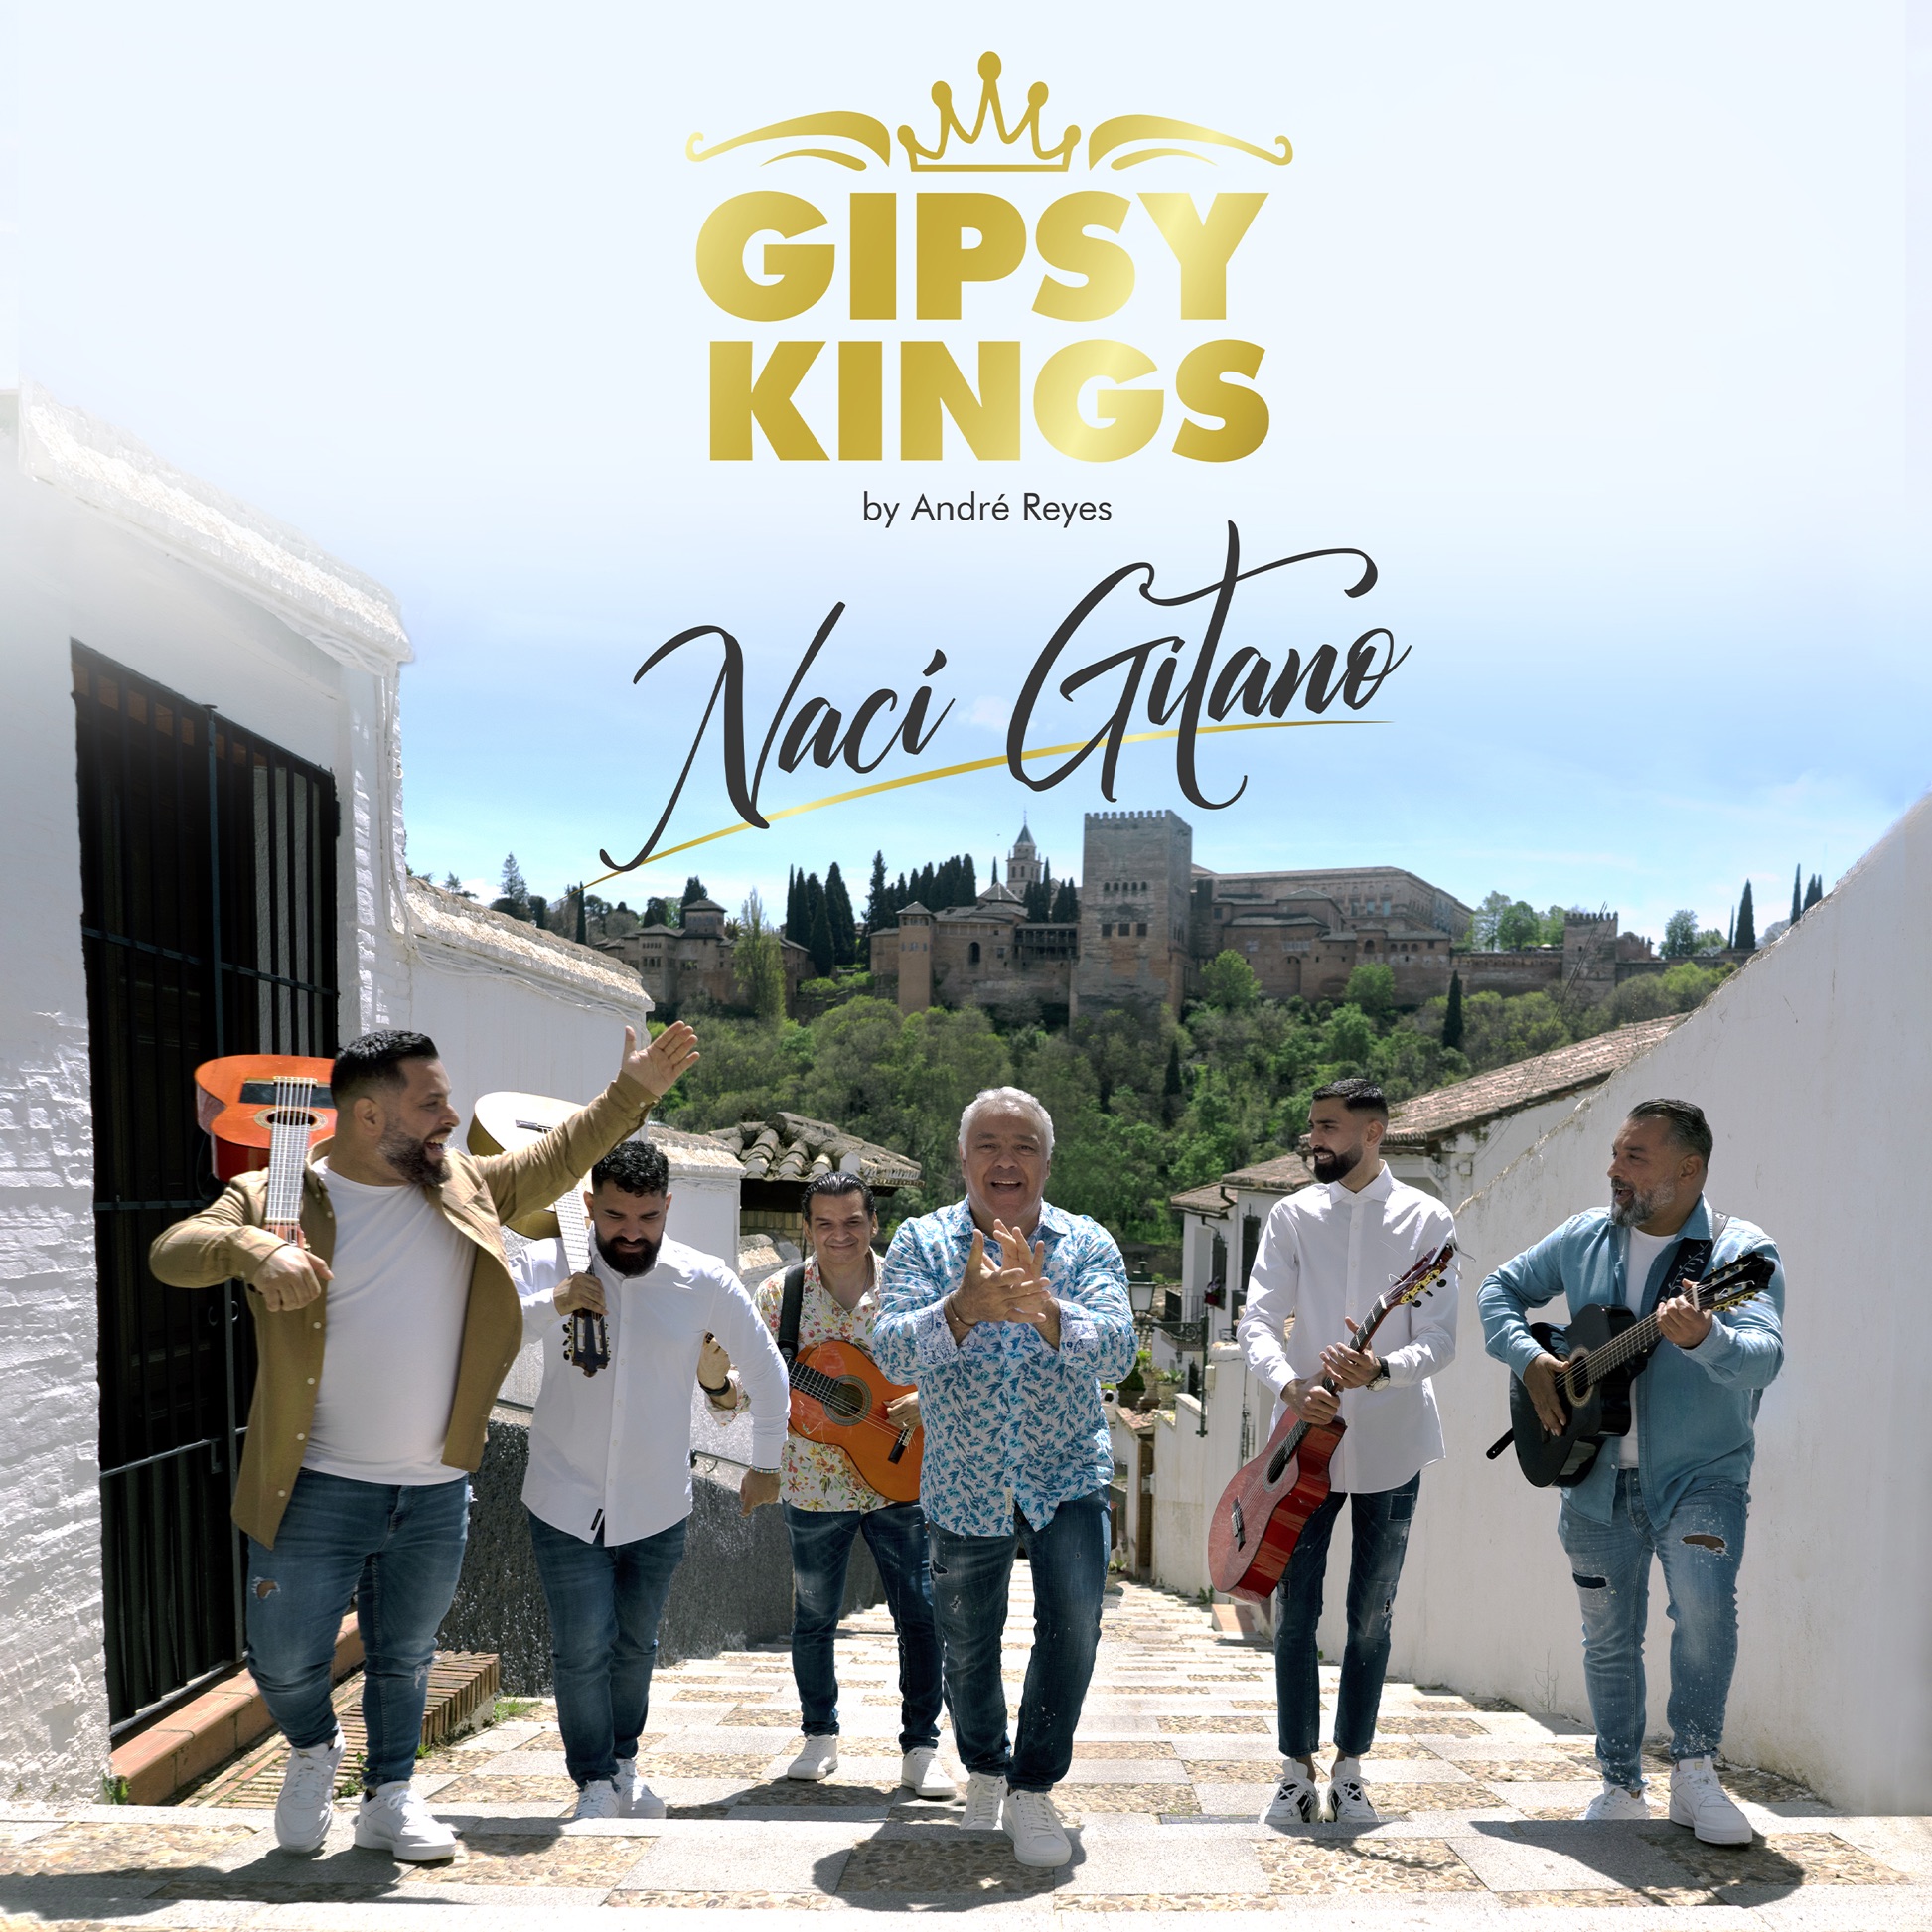 Gipsy Kings. Gipsy Kings albums. Николя Рэйес. Cien Reyes дискография. Gipsy kings remix